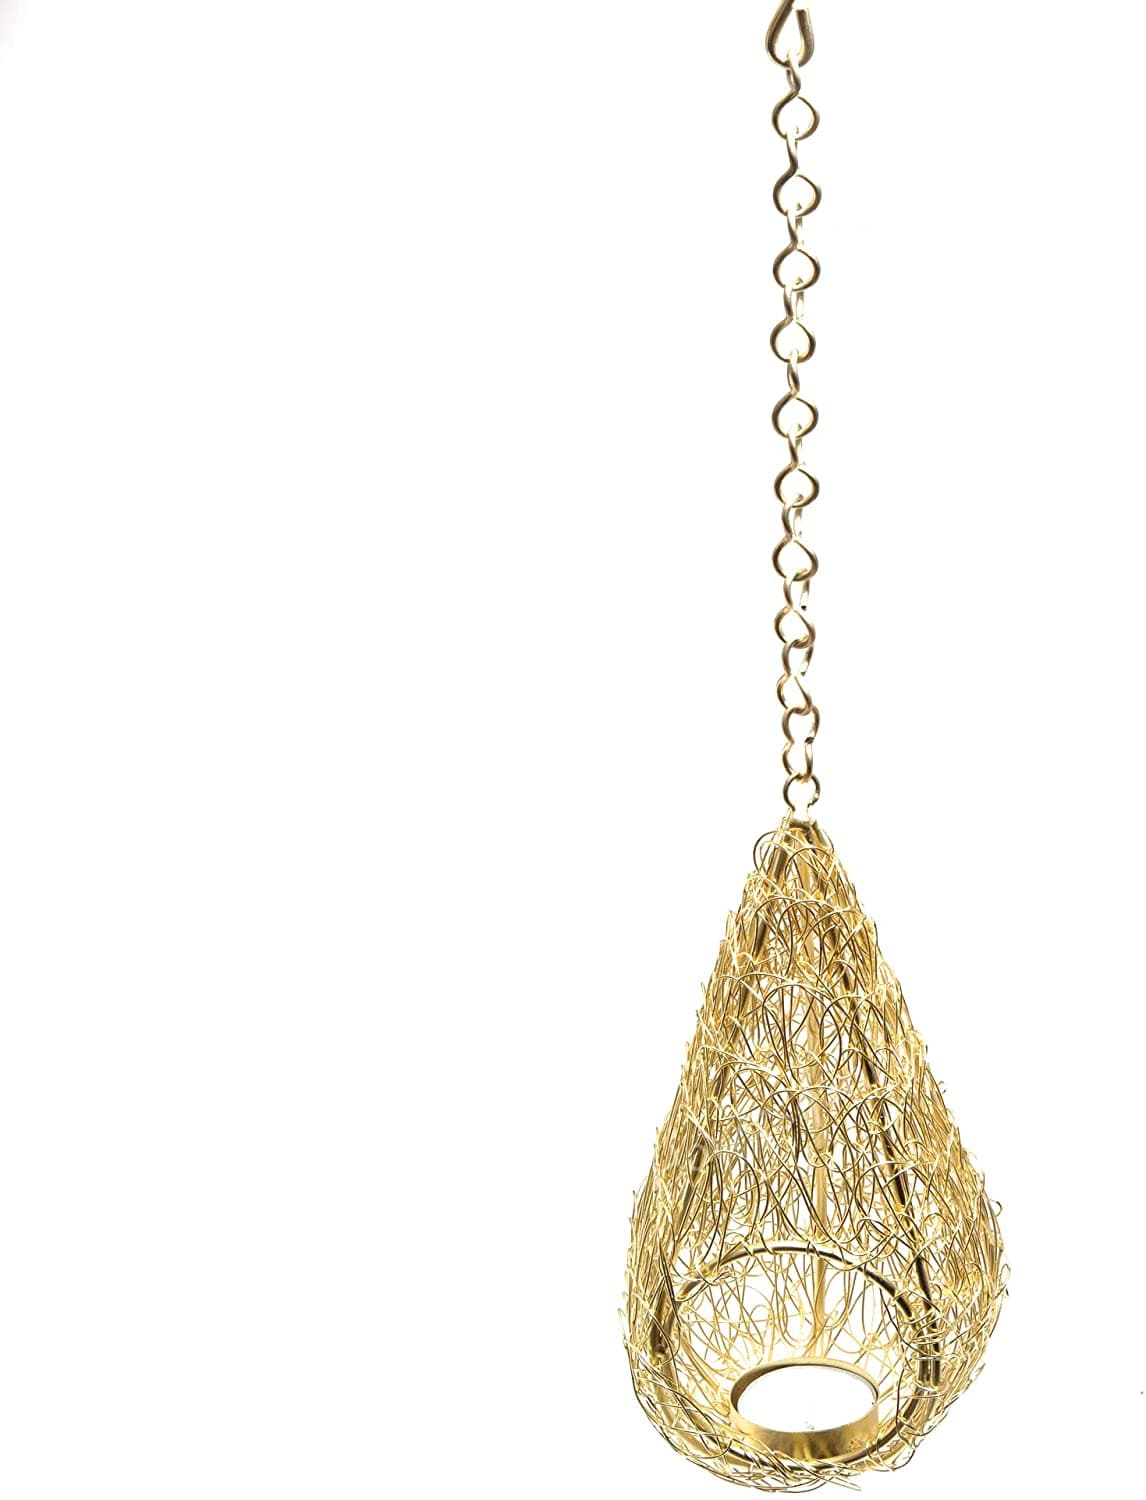 LAMANSH ® decorative cage candle holder Golden LAMANSH Decorative Metal Gold Bird's Nest Hanging Tealight Candle Holder